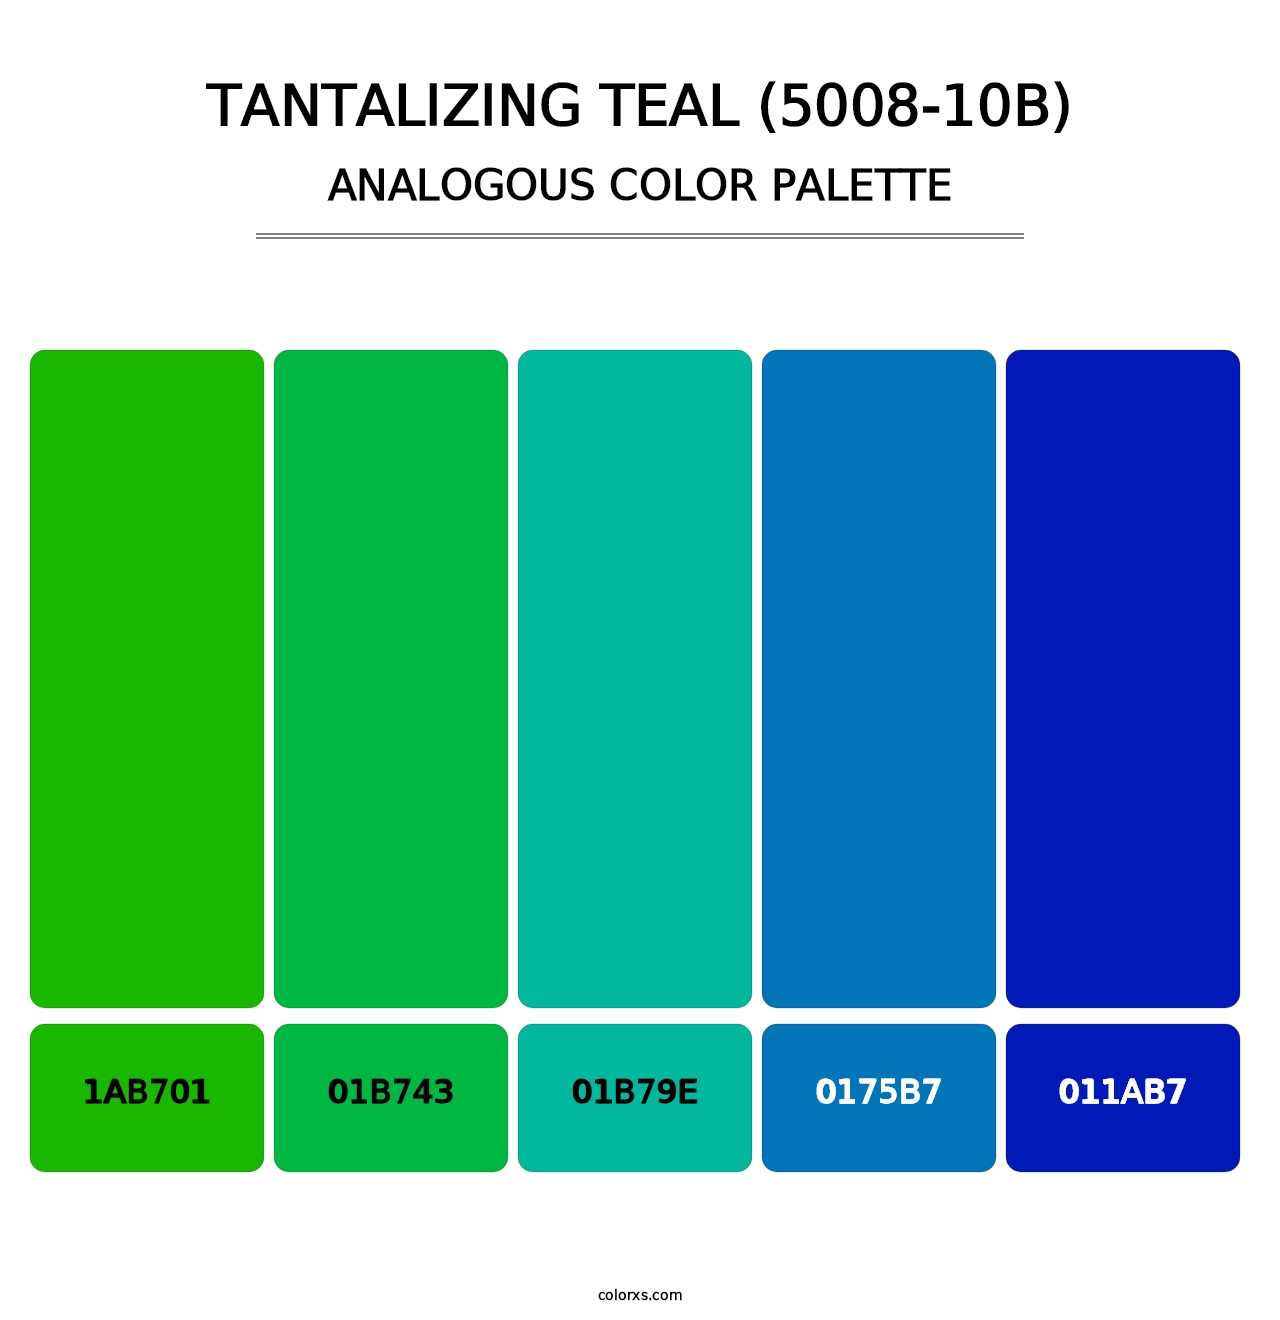 Tantalizing Teal (5008-10B) - Analogous Color Palette